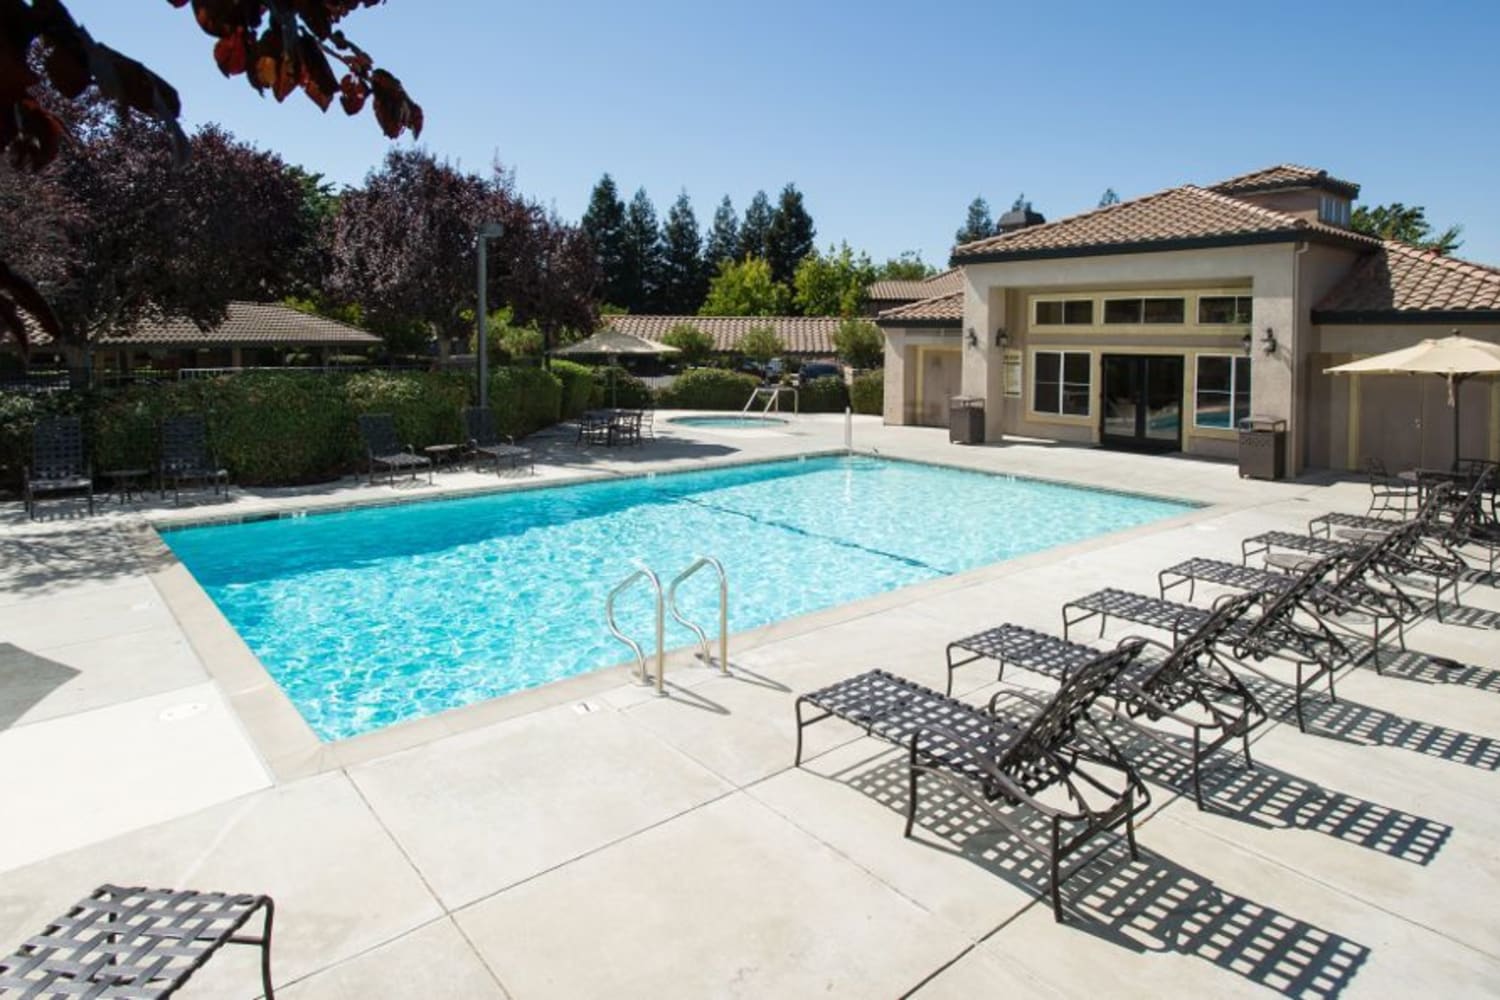 Swimming pool at La Vina Apartments in Livermore, California